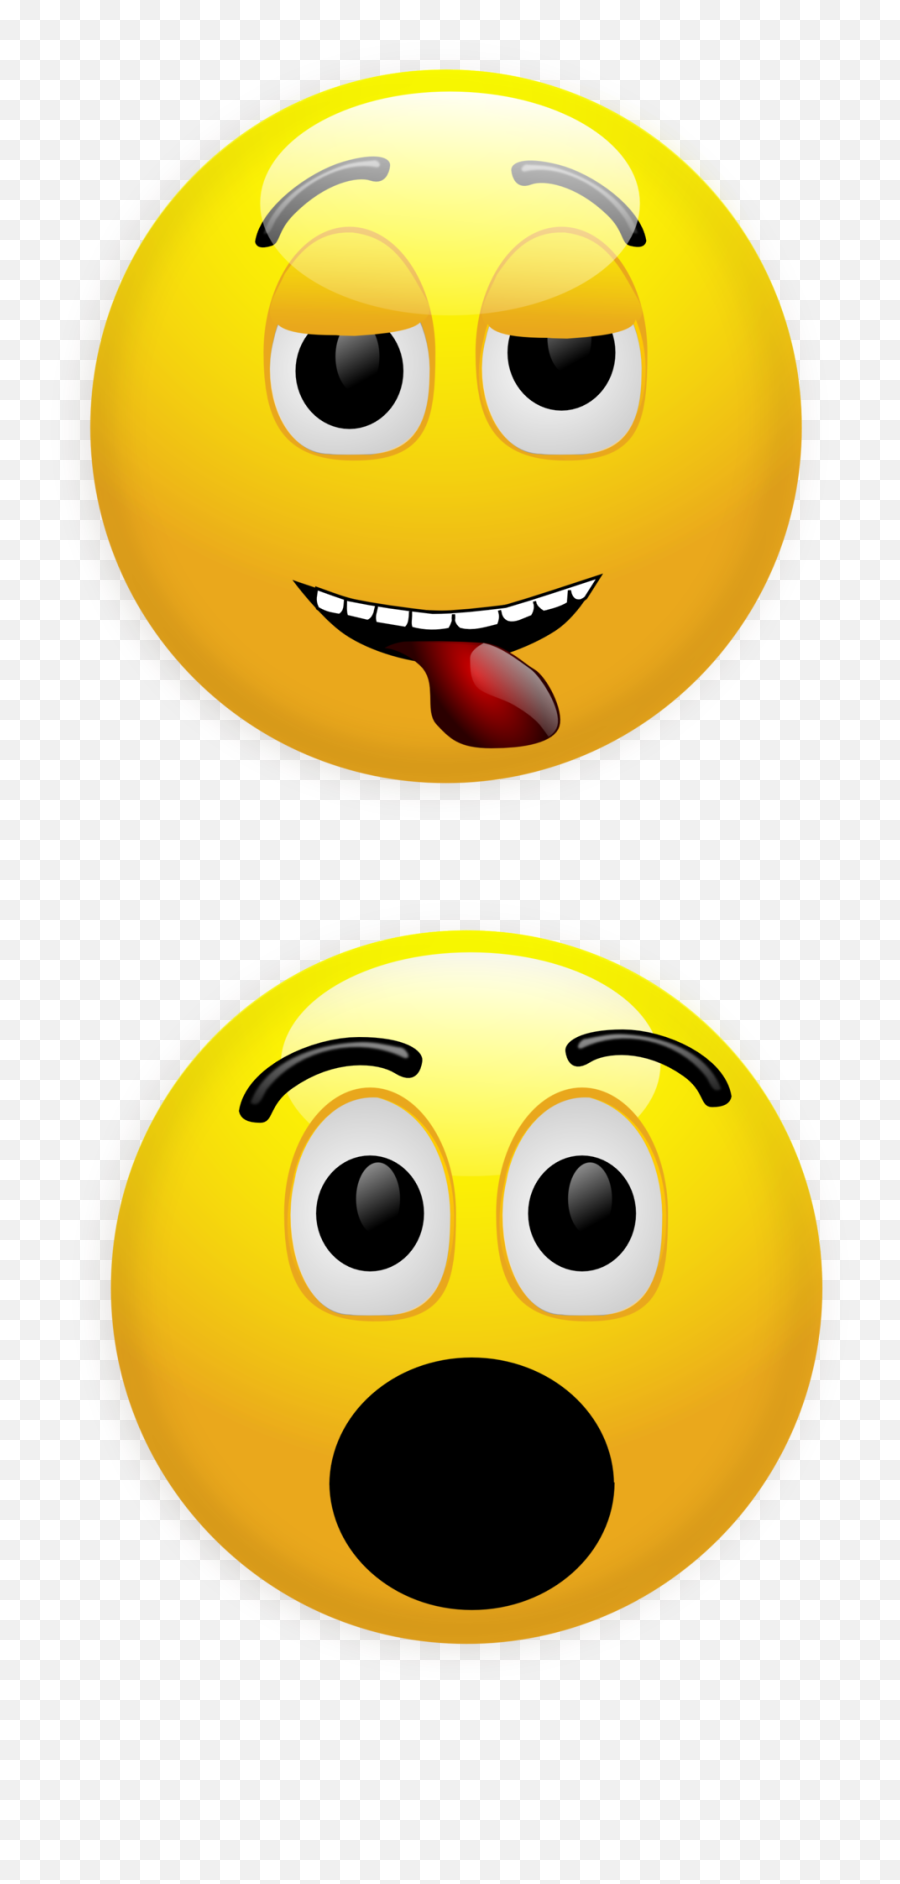 13545107412987 - Theory Of Personality Ego Emoji,Smiley Emoticon